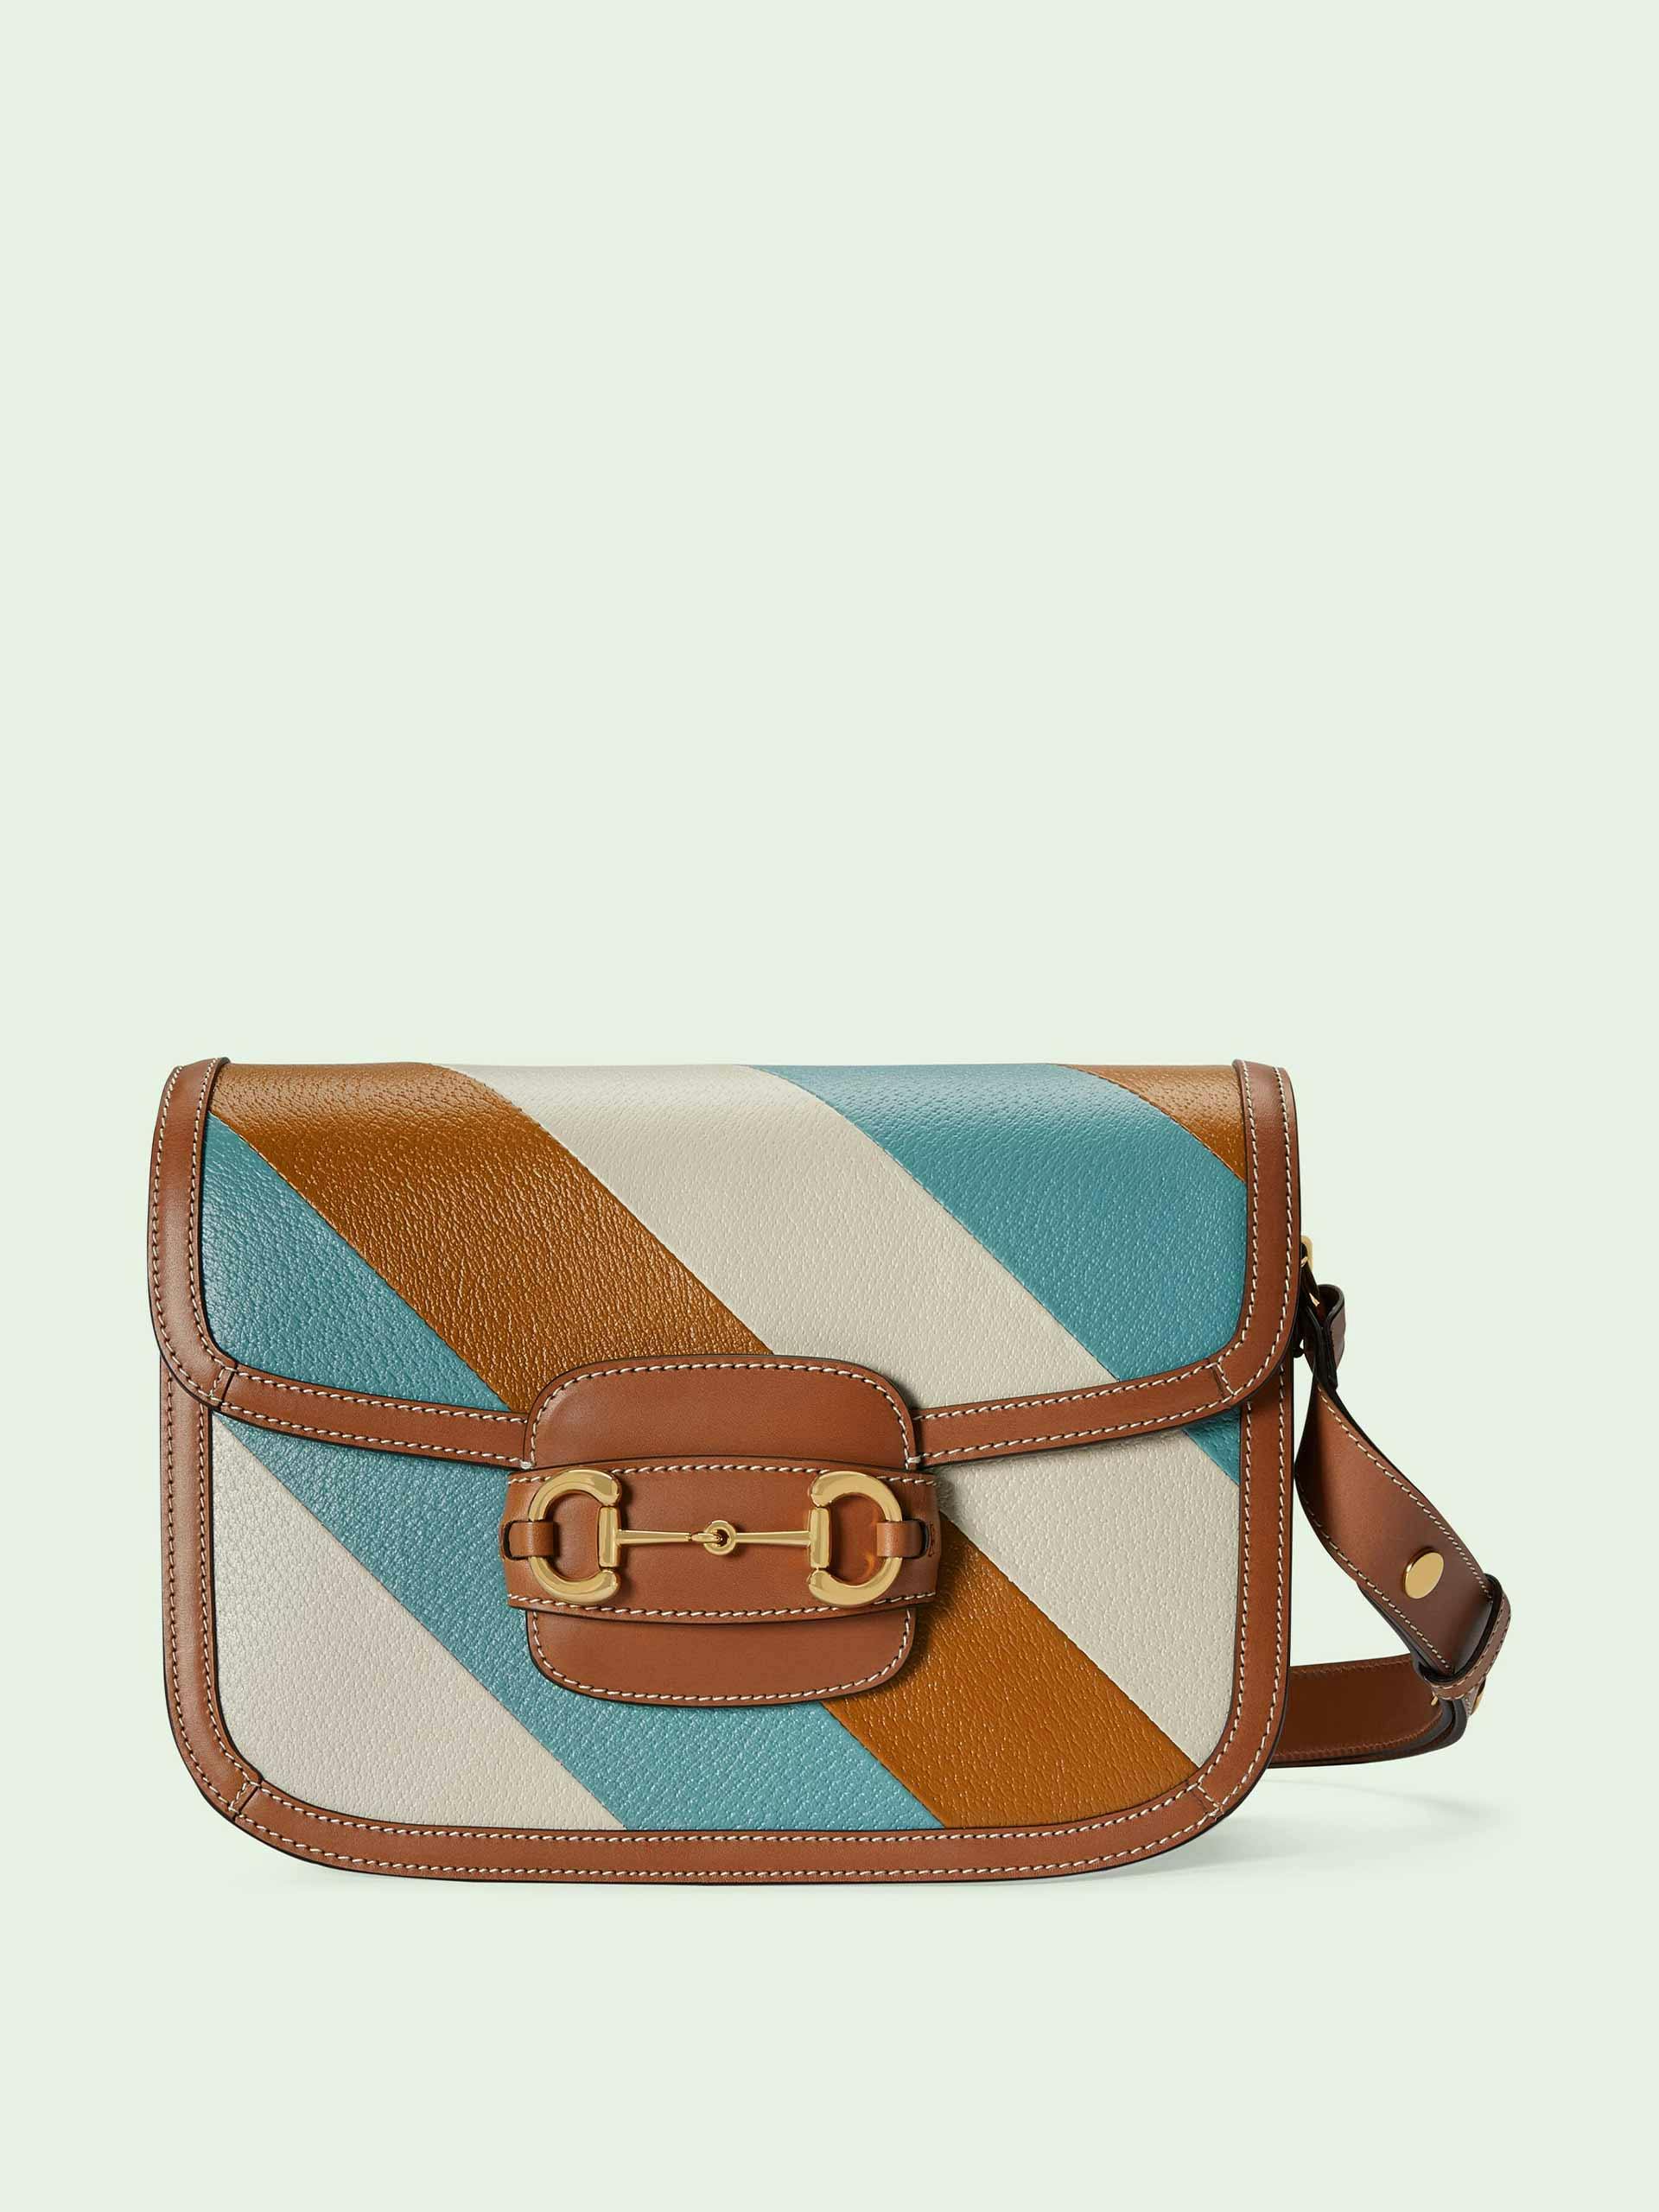 Blue and brown leather handbag